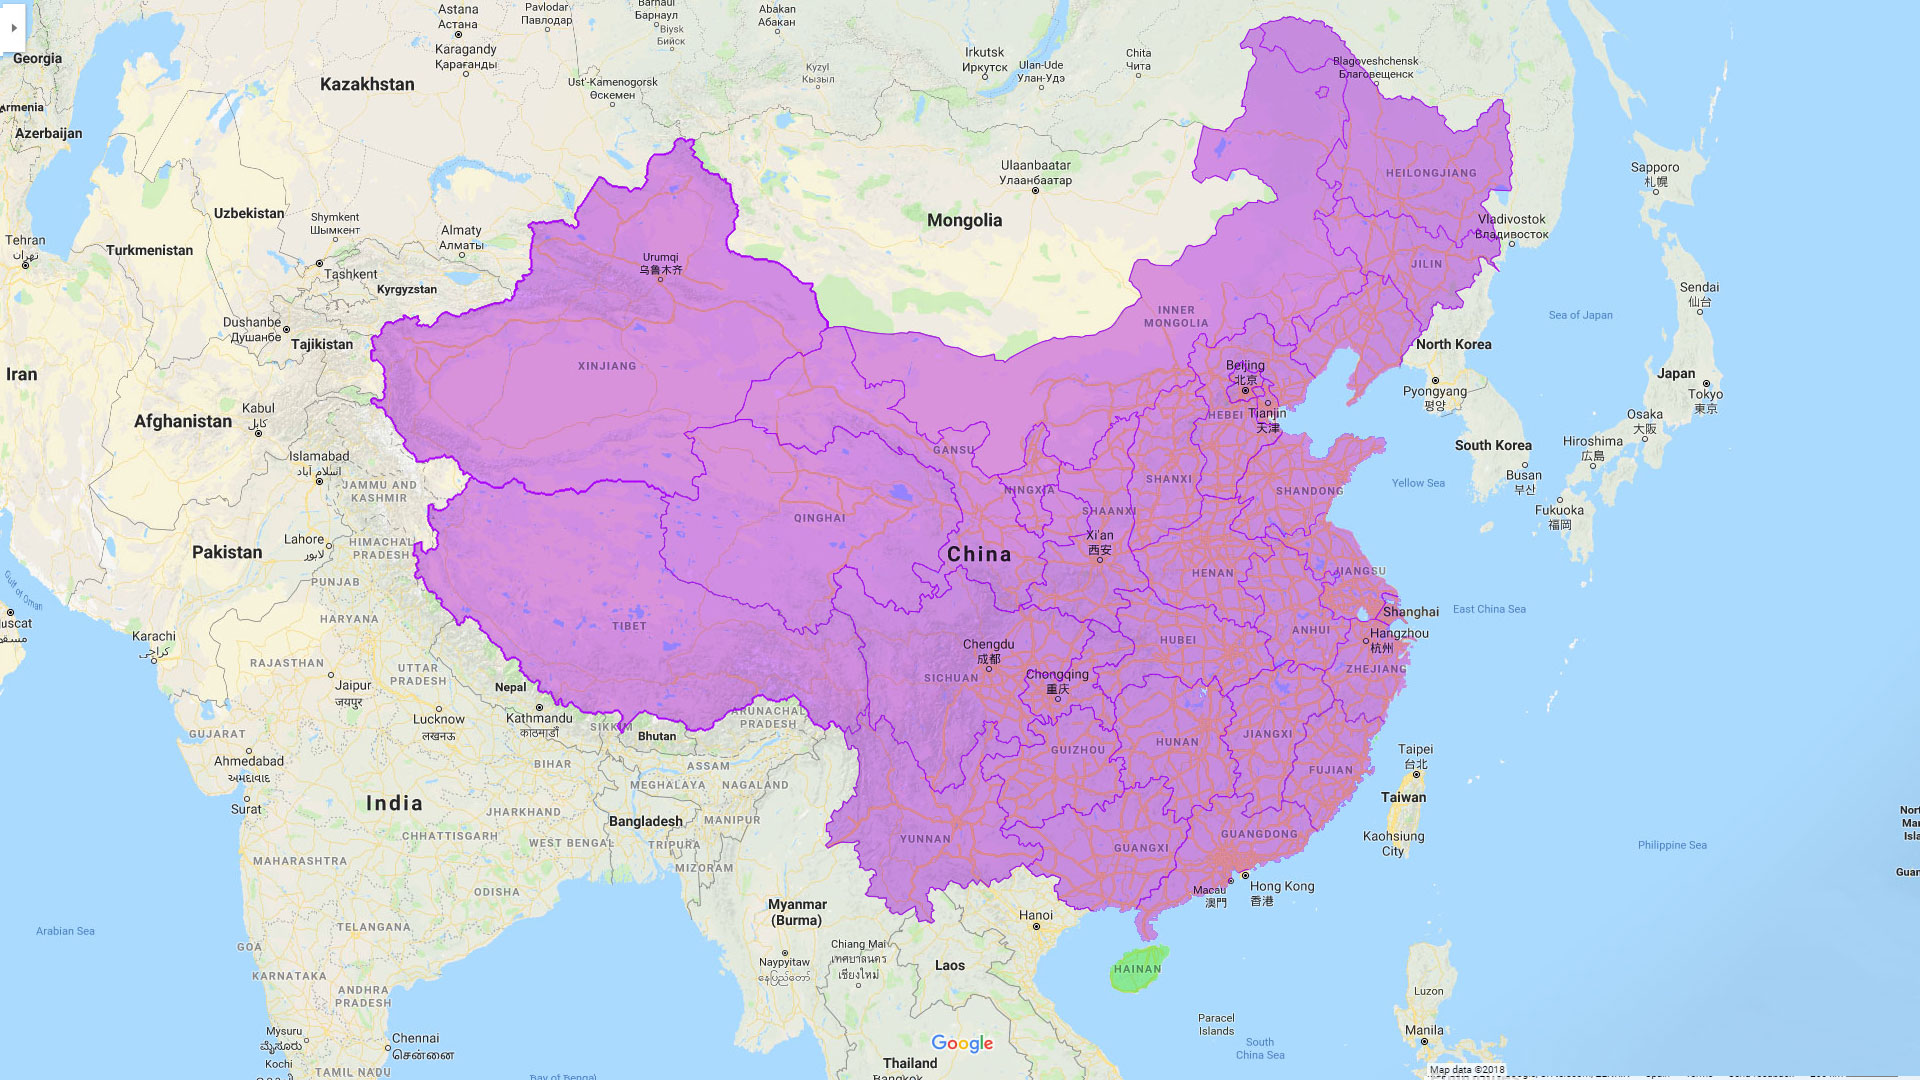 PPA afecta a toda China